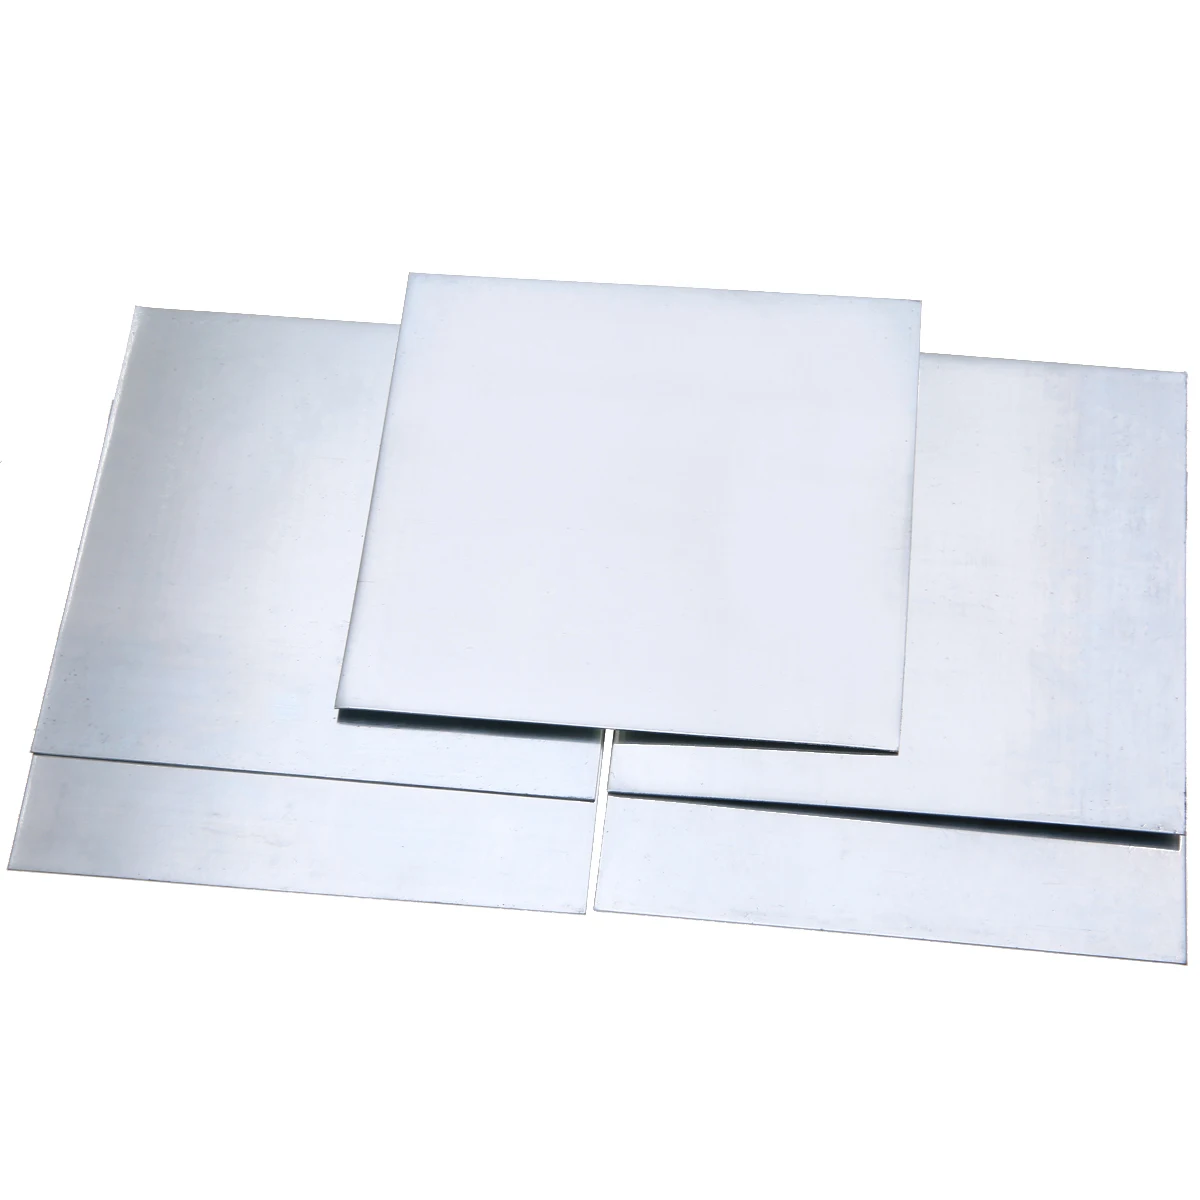 5pcs Pratical Pure Zinc Zn Sheet Plate Metal Foil 100mmx100mmx0.5mm For Science Lab Accessories